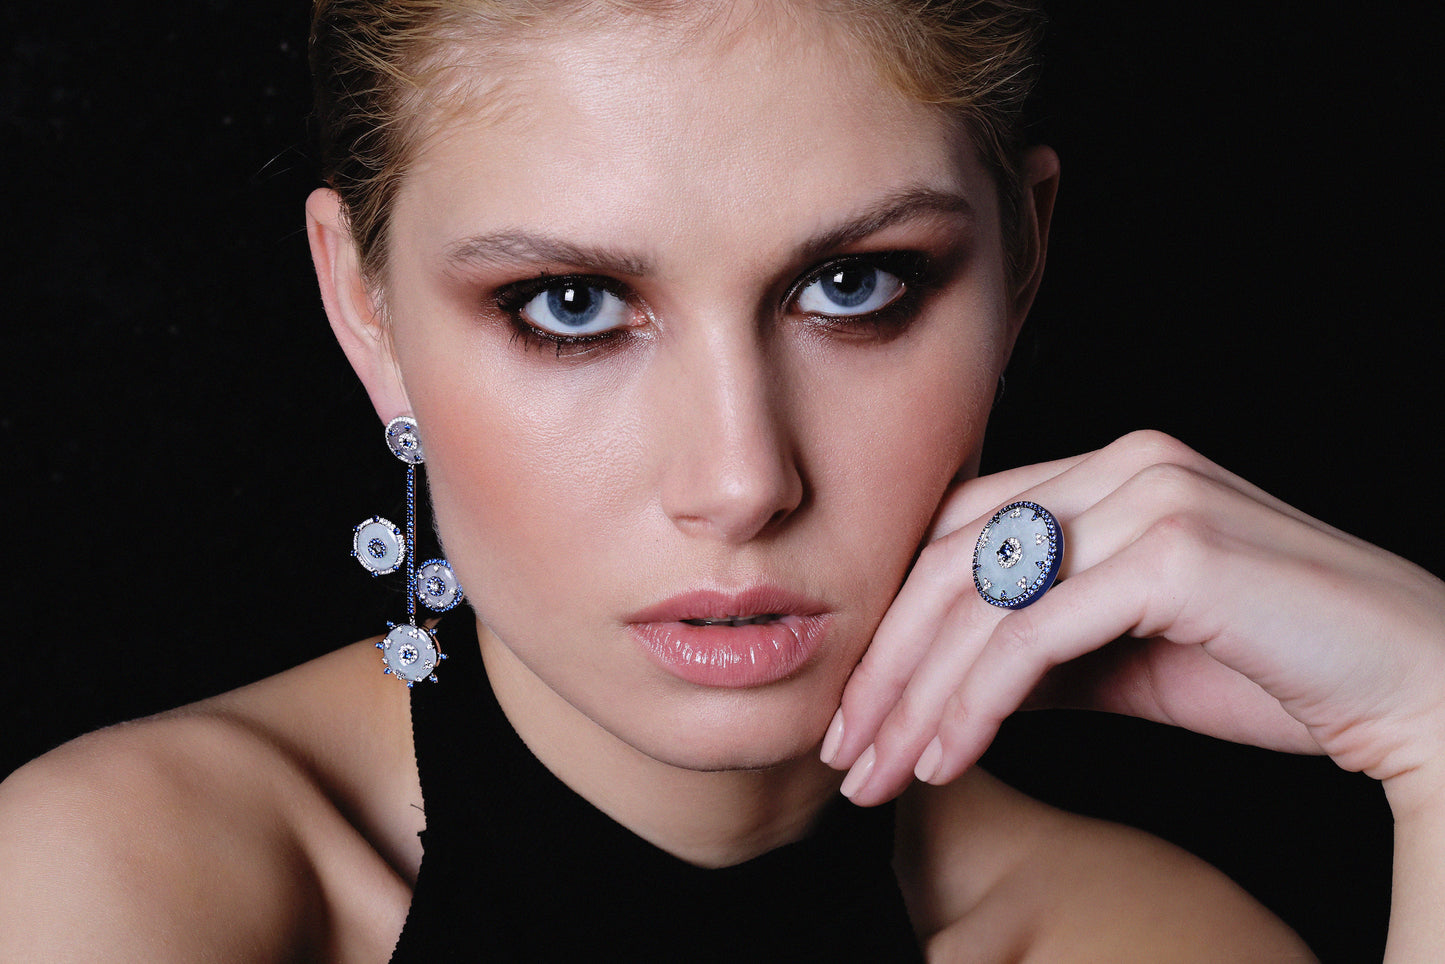 Celeste Blue Sapphire & Jade Ring